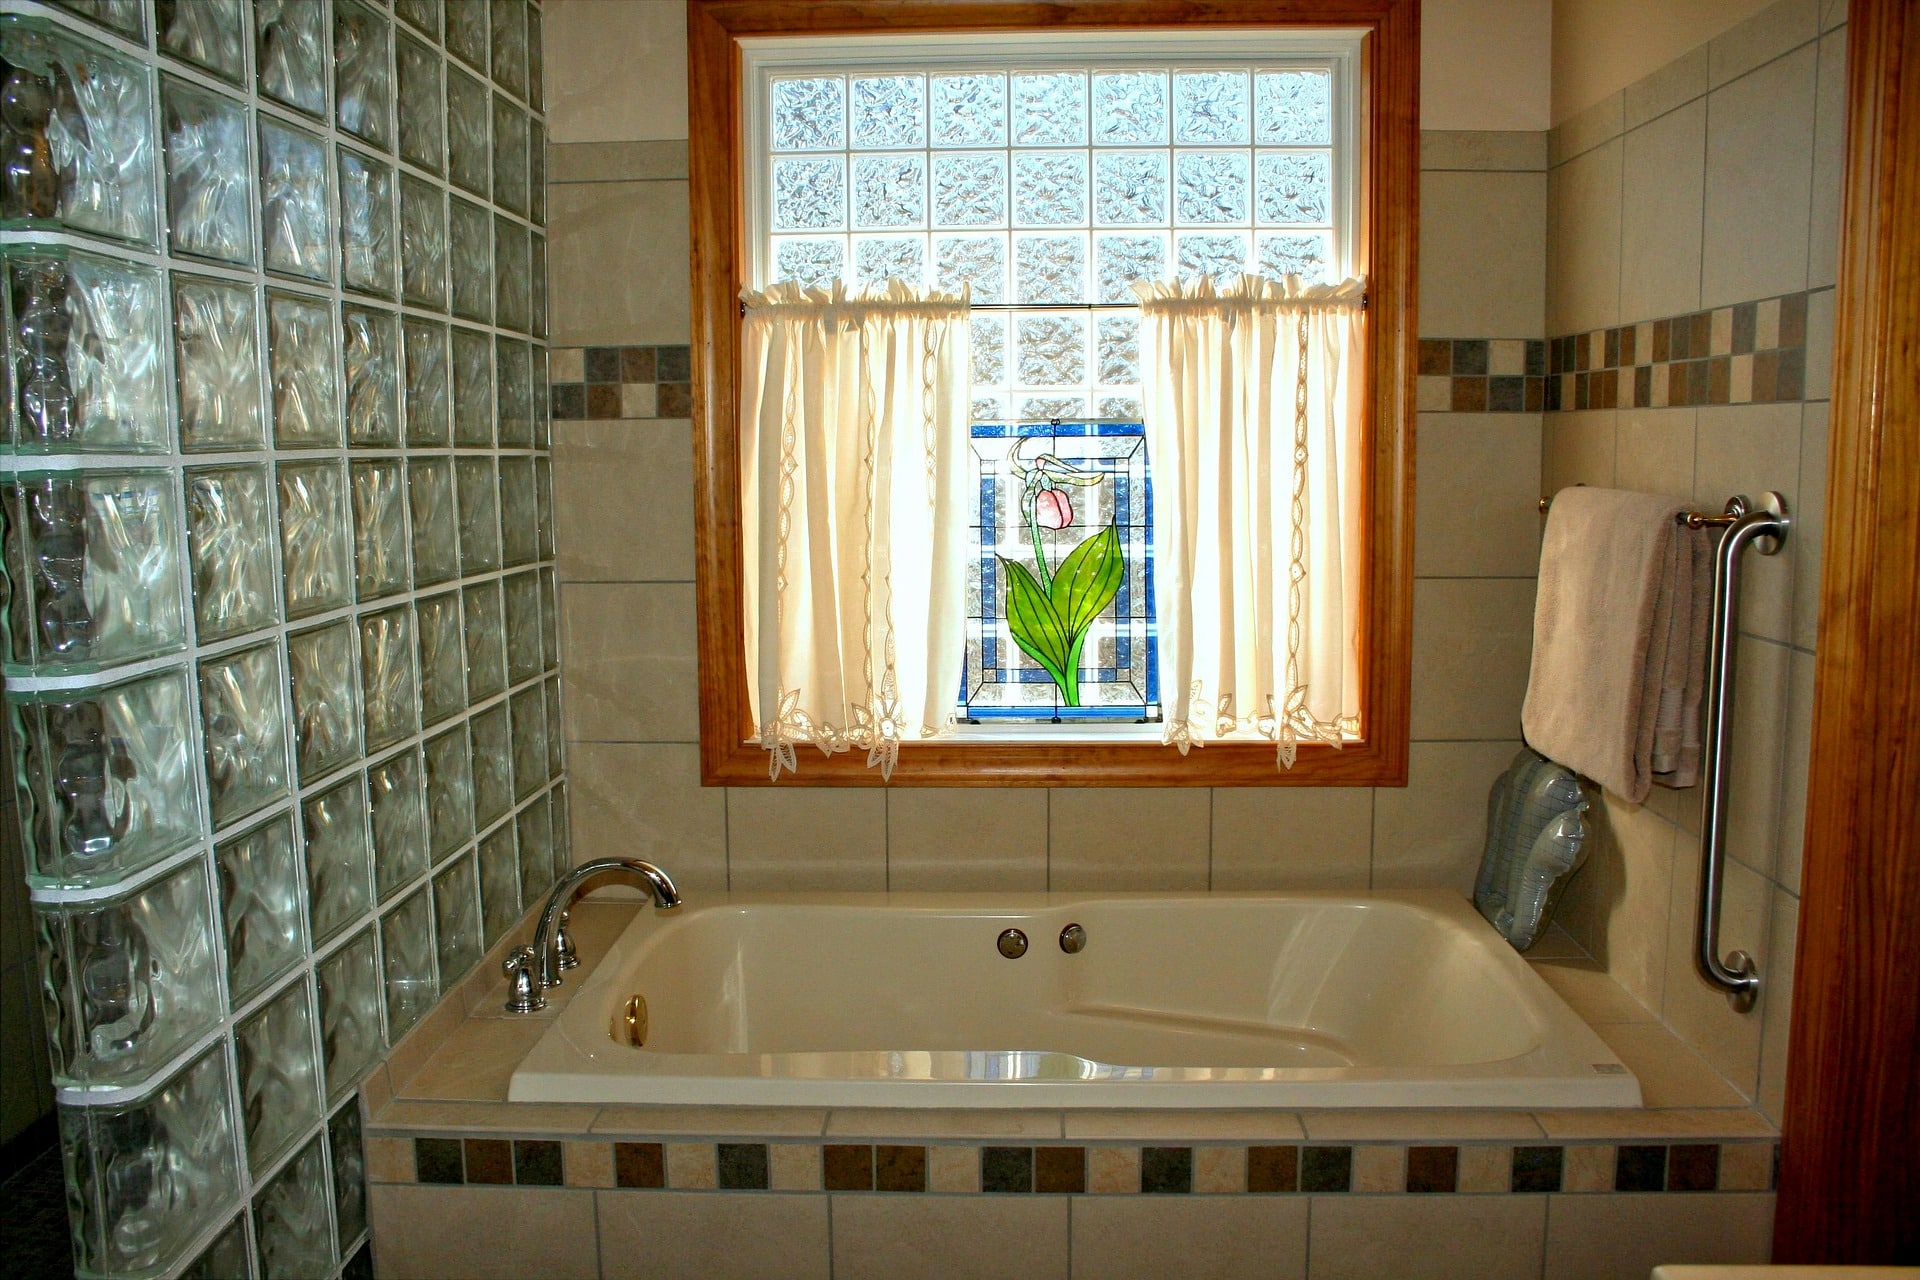 Slip Resistant Surface Tub Tile, Bathtub Slip Resistant